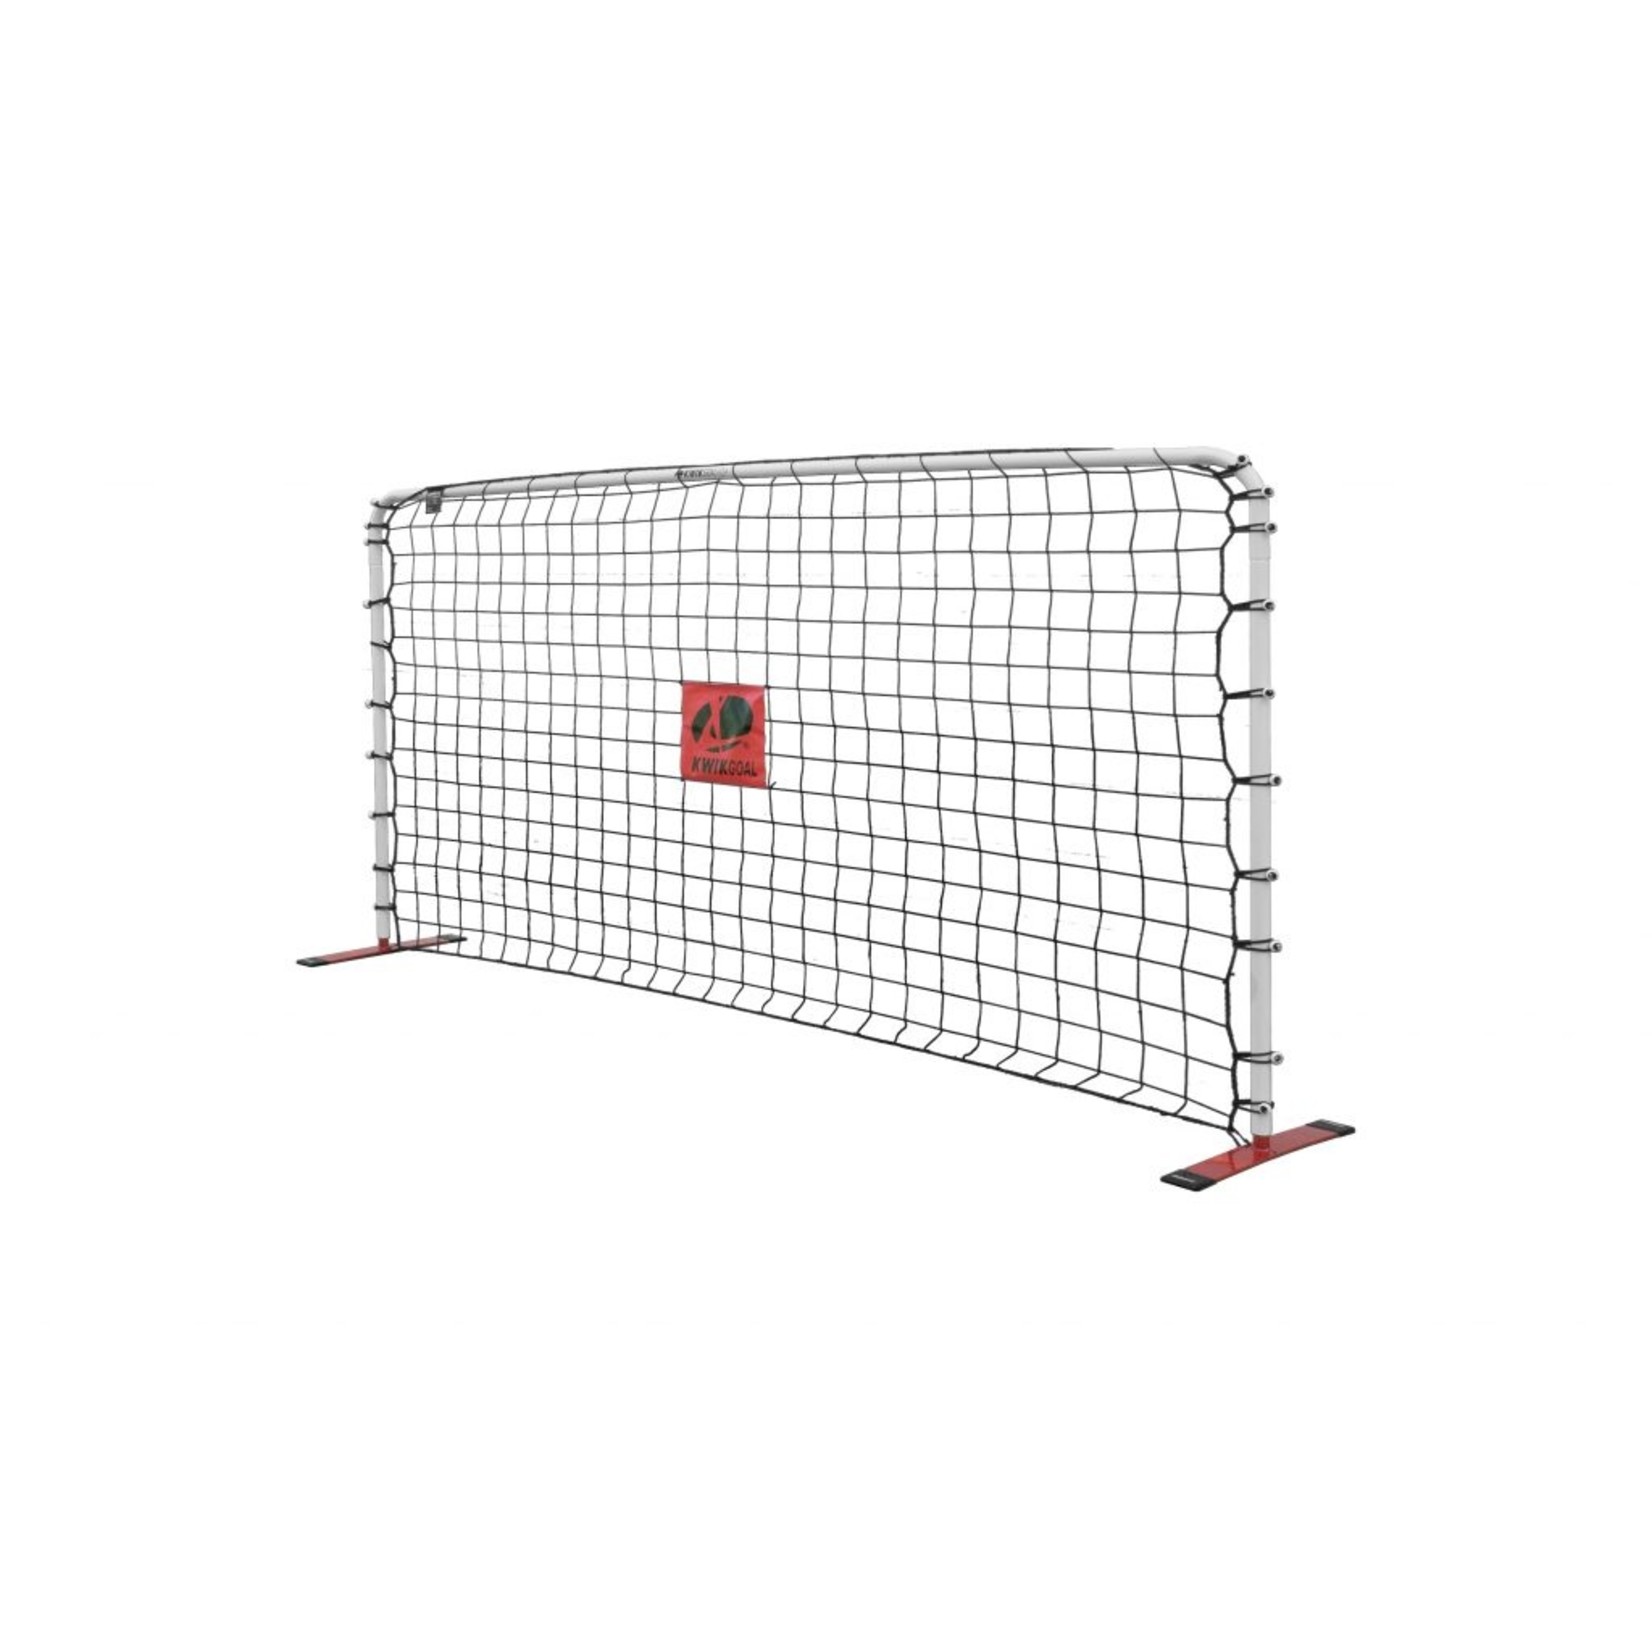 Kwik Goal AFR-2 Rebounder 5x10